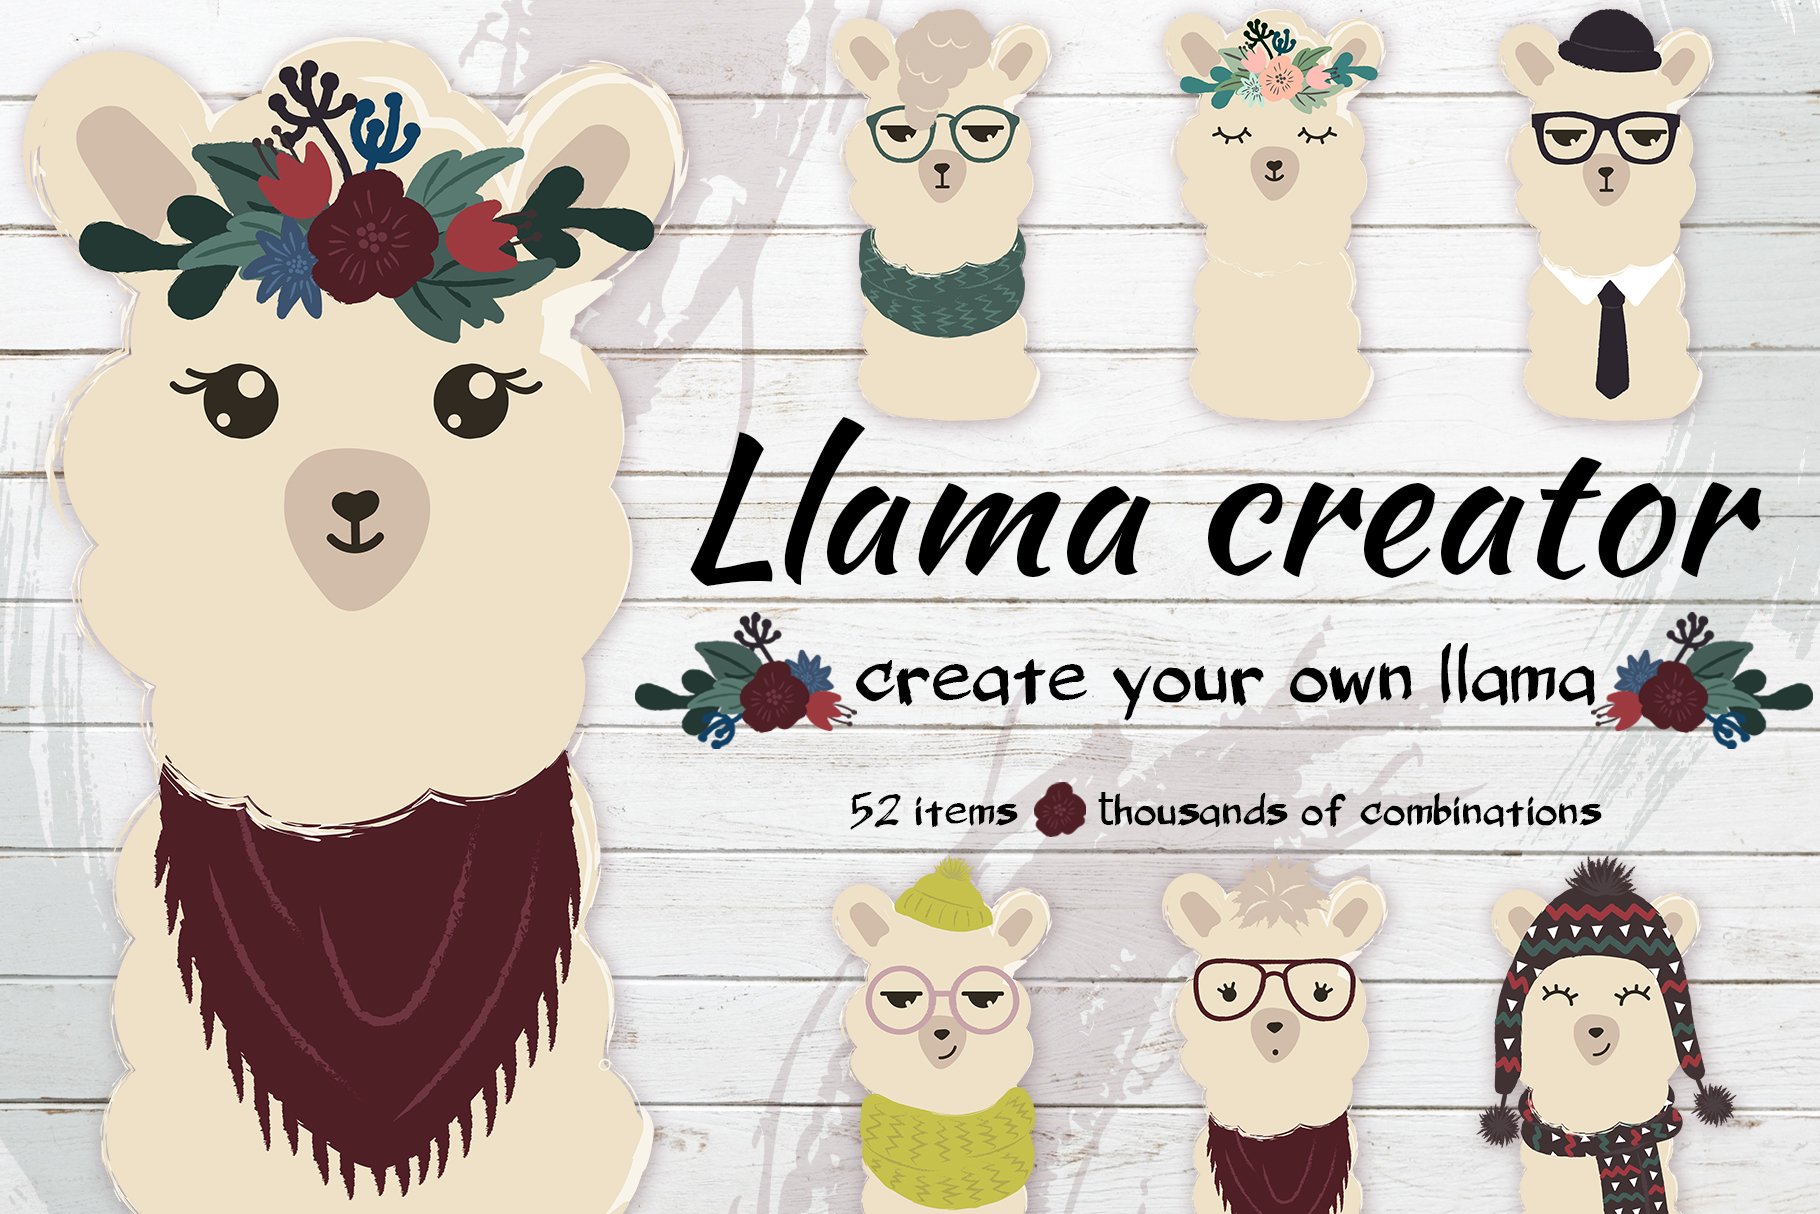 The cute llama creator cover image.